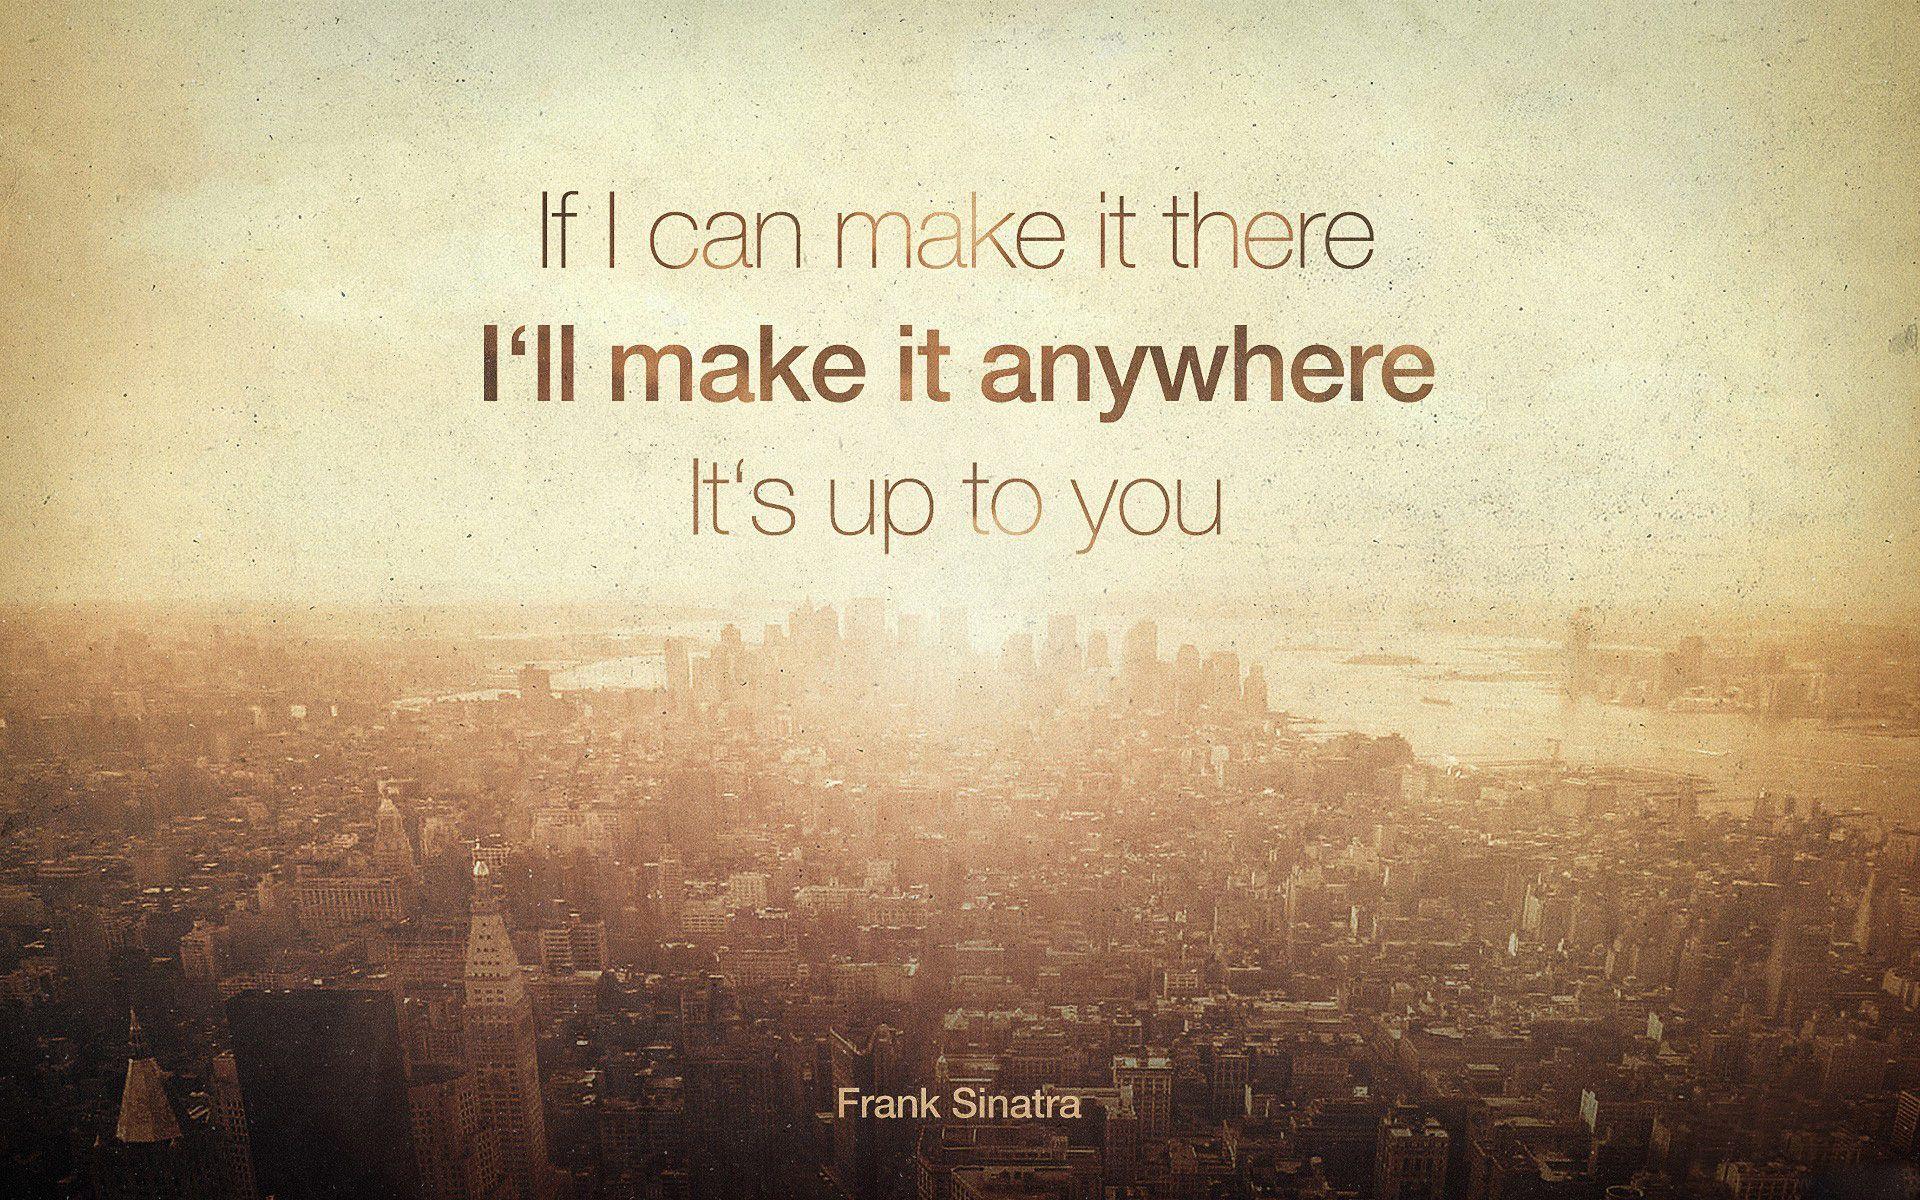 Frank Sinatra quote Wallpaper #